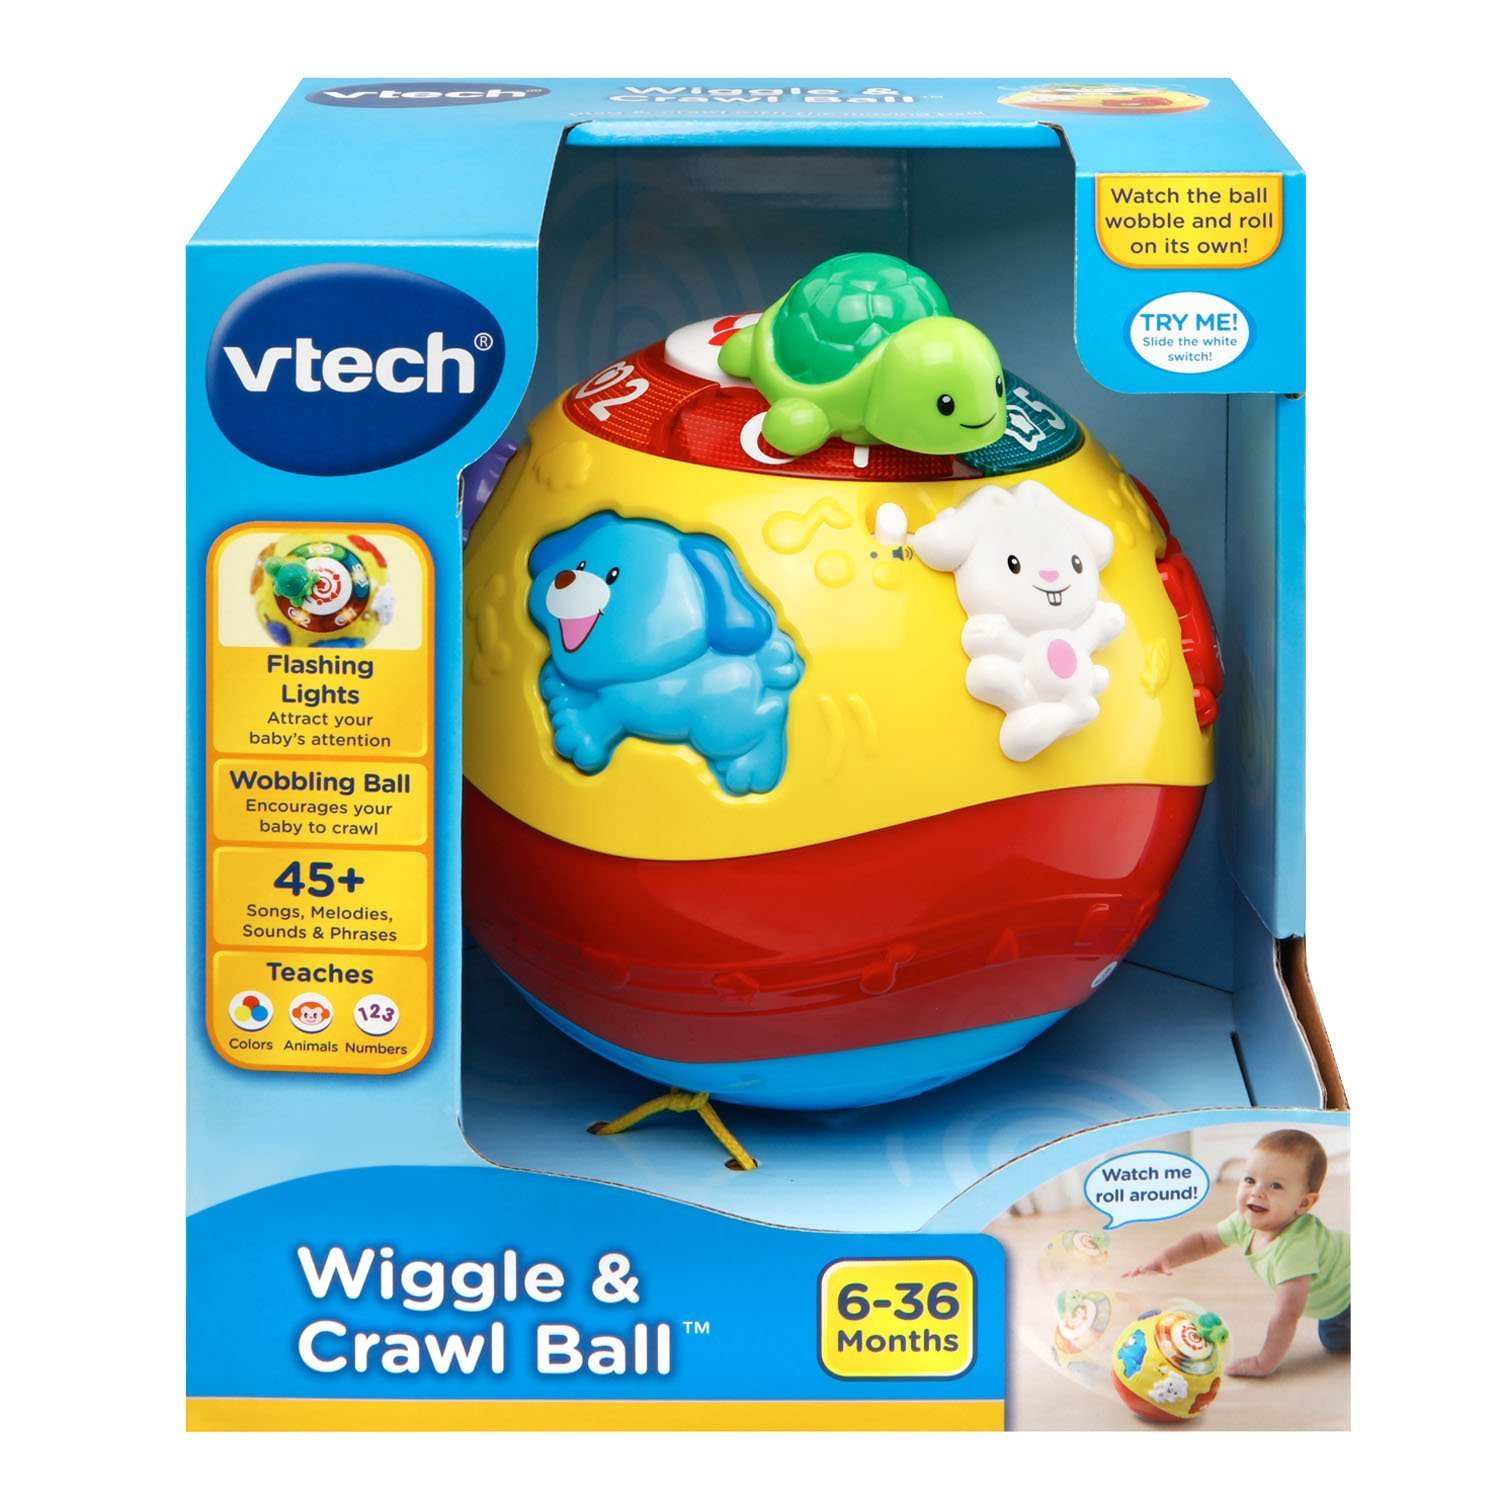 vtech ball crawl